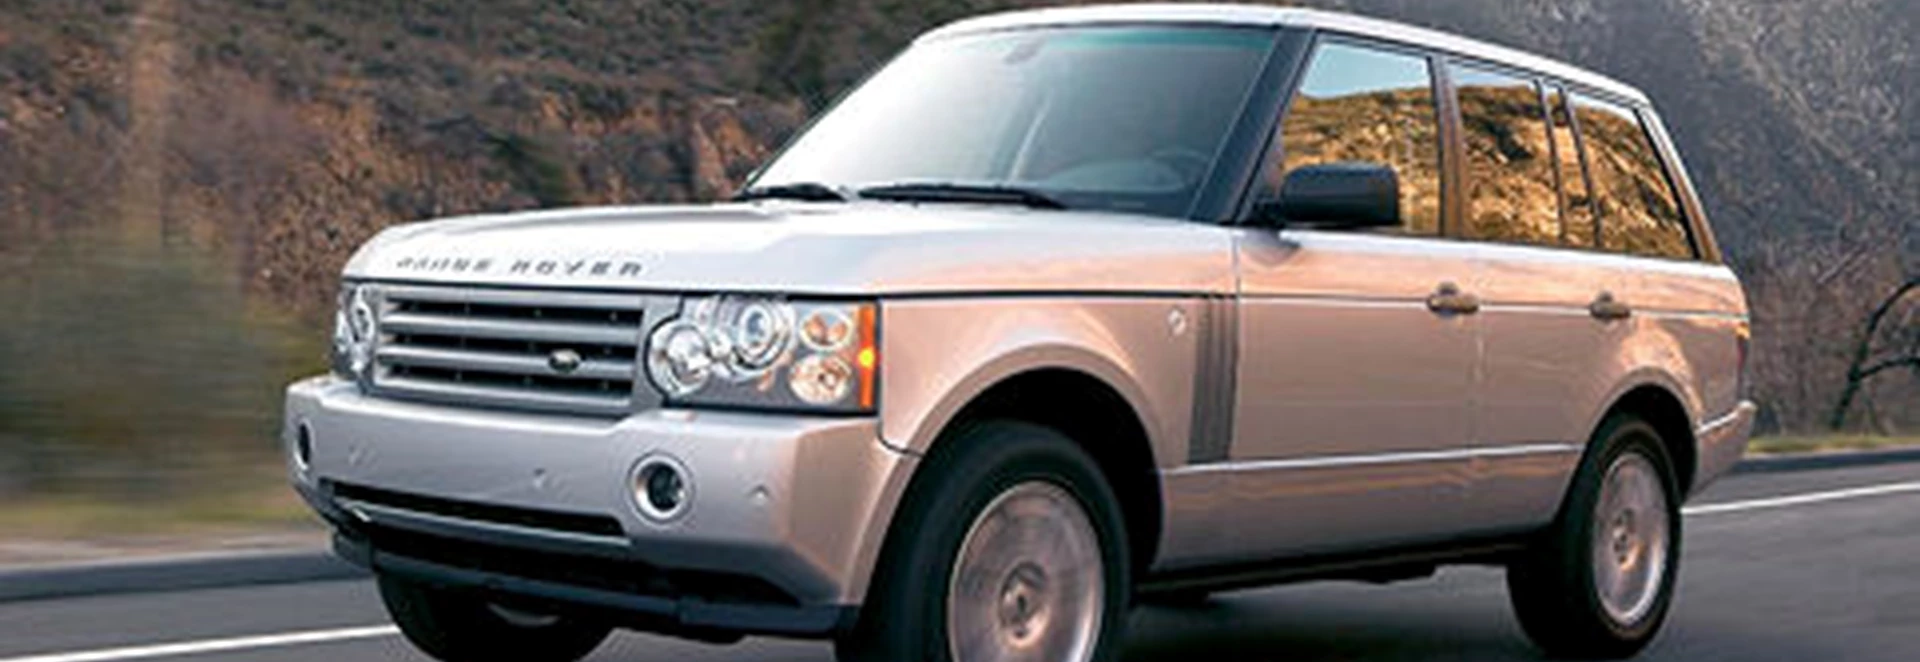 Range Rover TDV8 HSE 